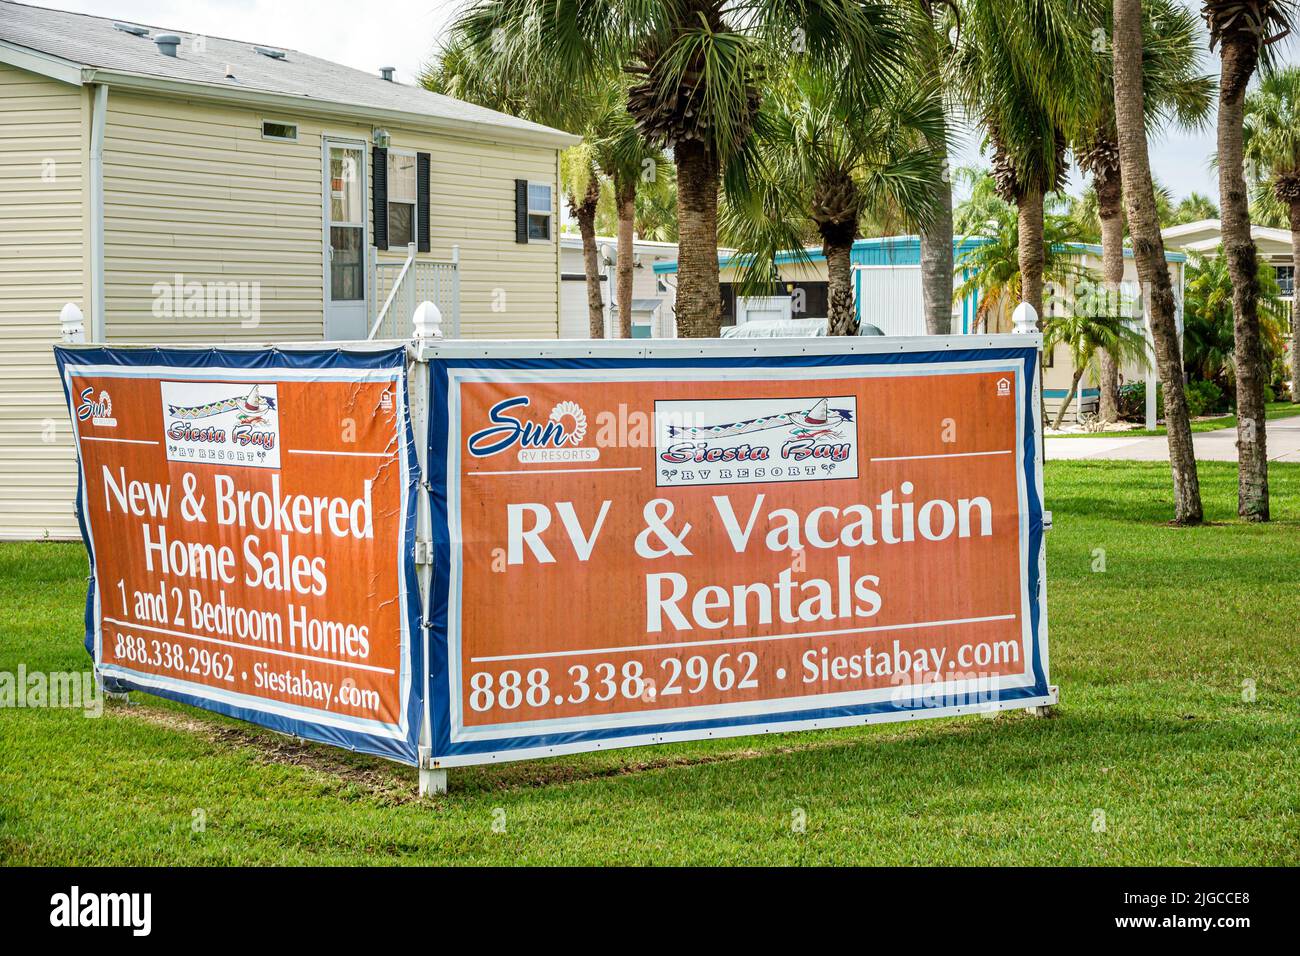 Fort Ft. Myers Florida,Siesta Bay RV Resort sign new brokered home sales 1 2 bedroom vacation rentals trailer park prefab prefabricated Stock Photo